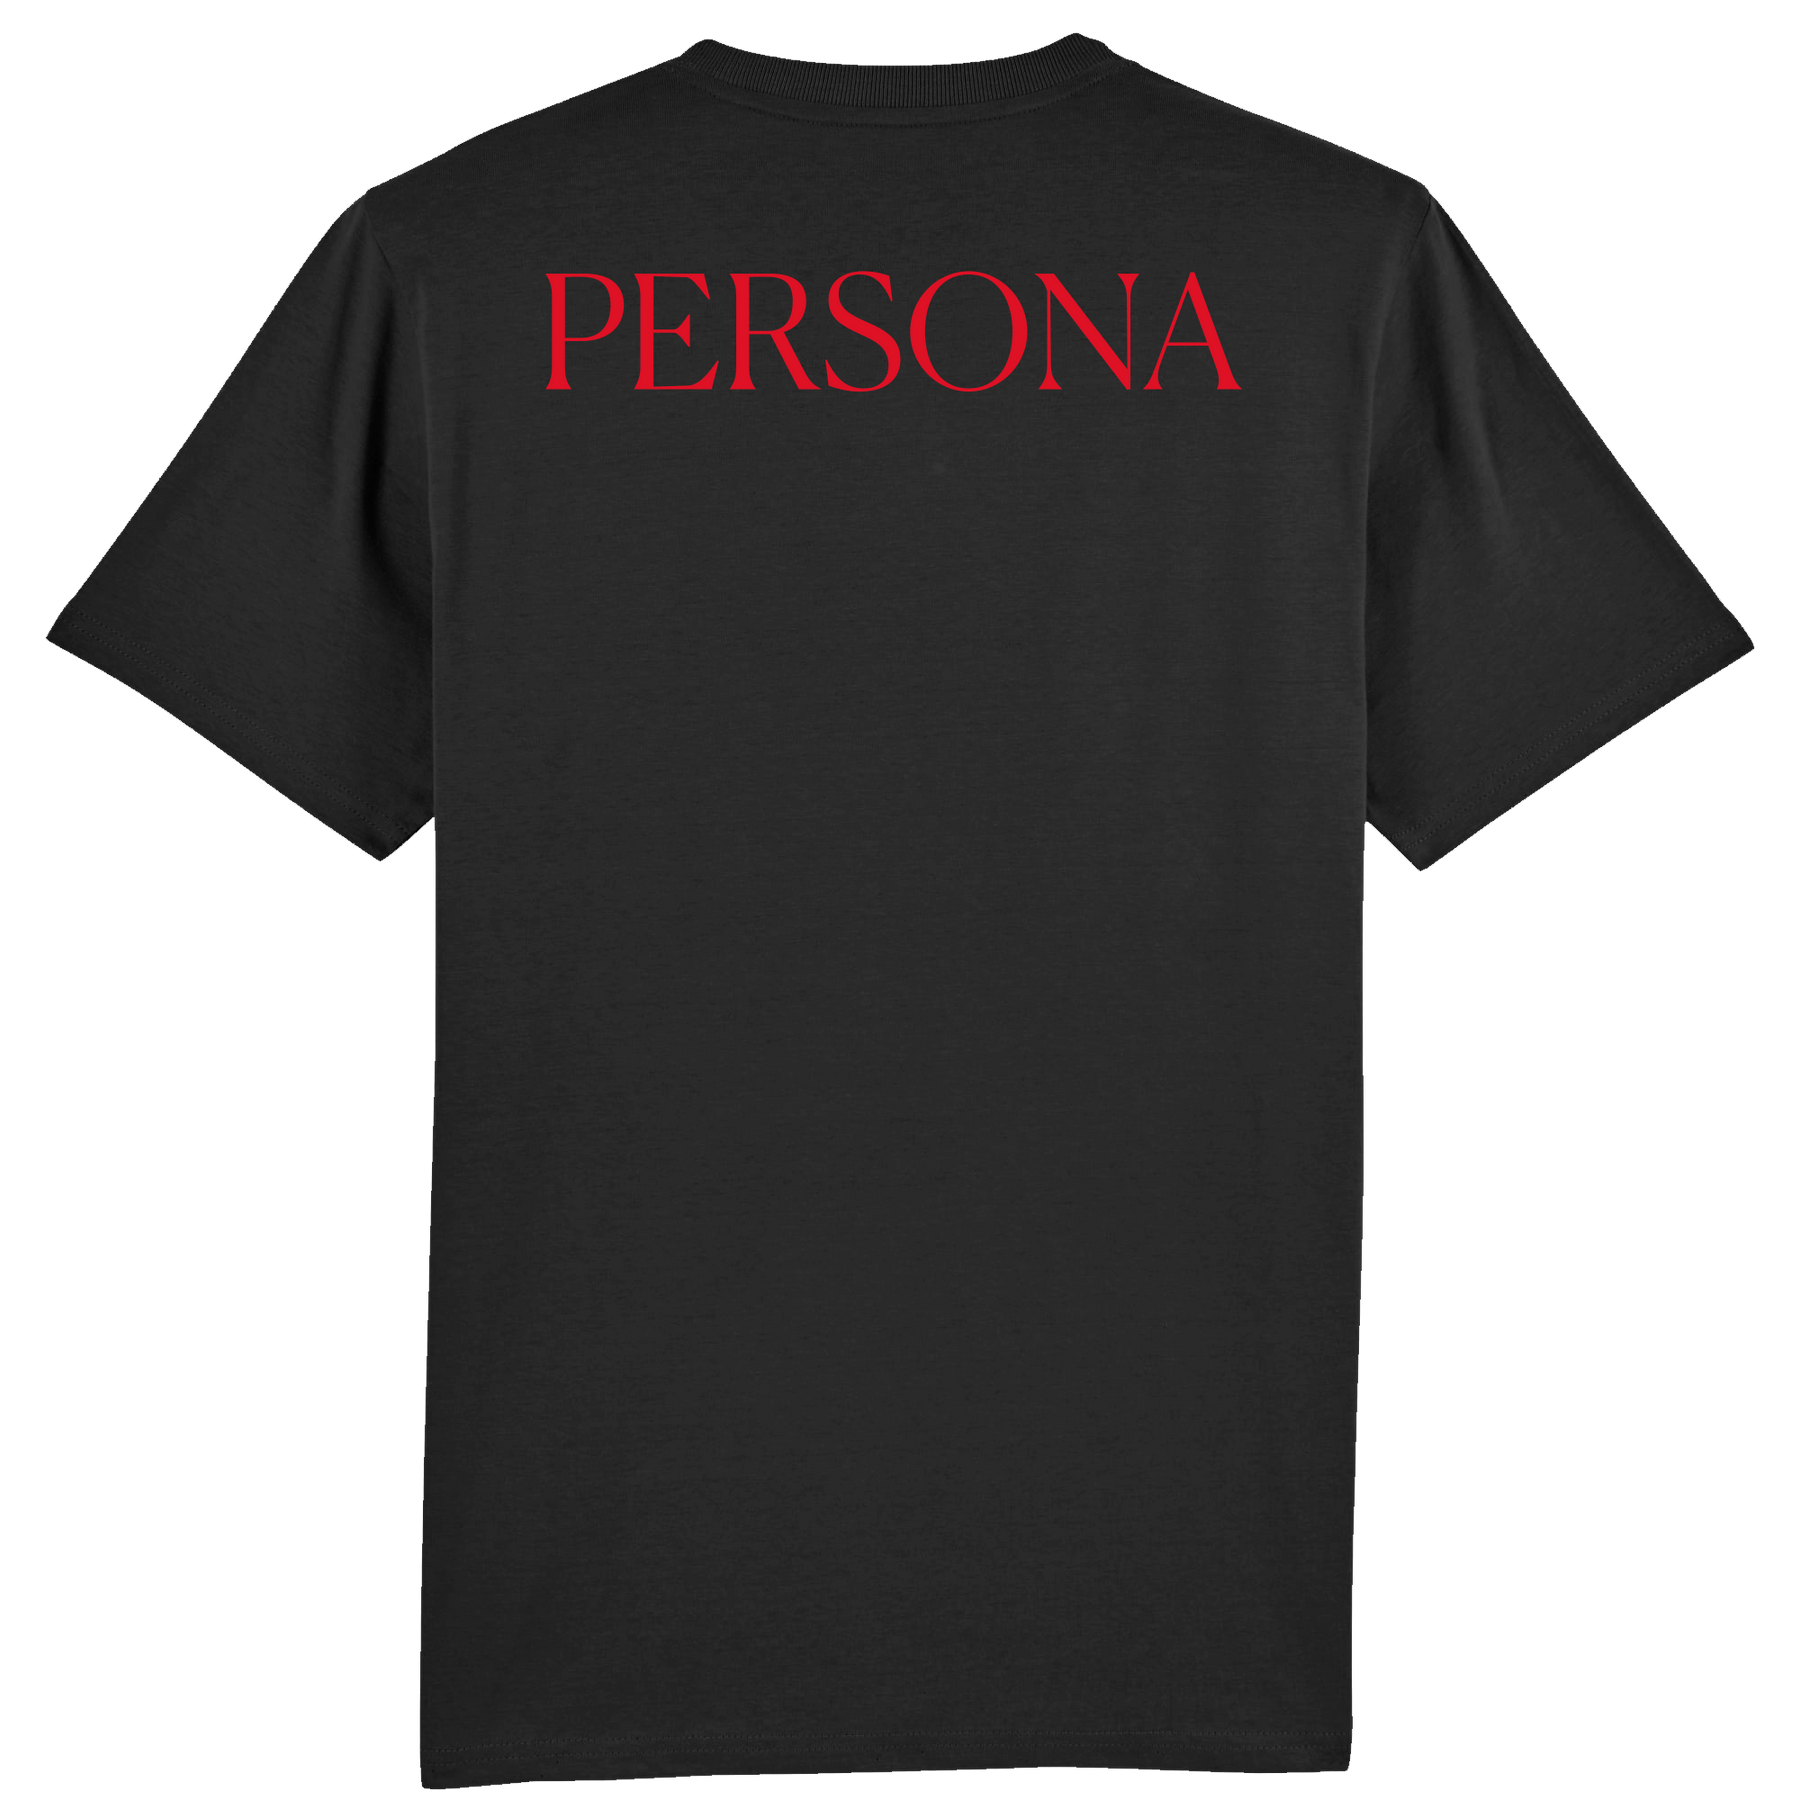 PERSONA T-shirt